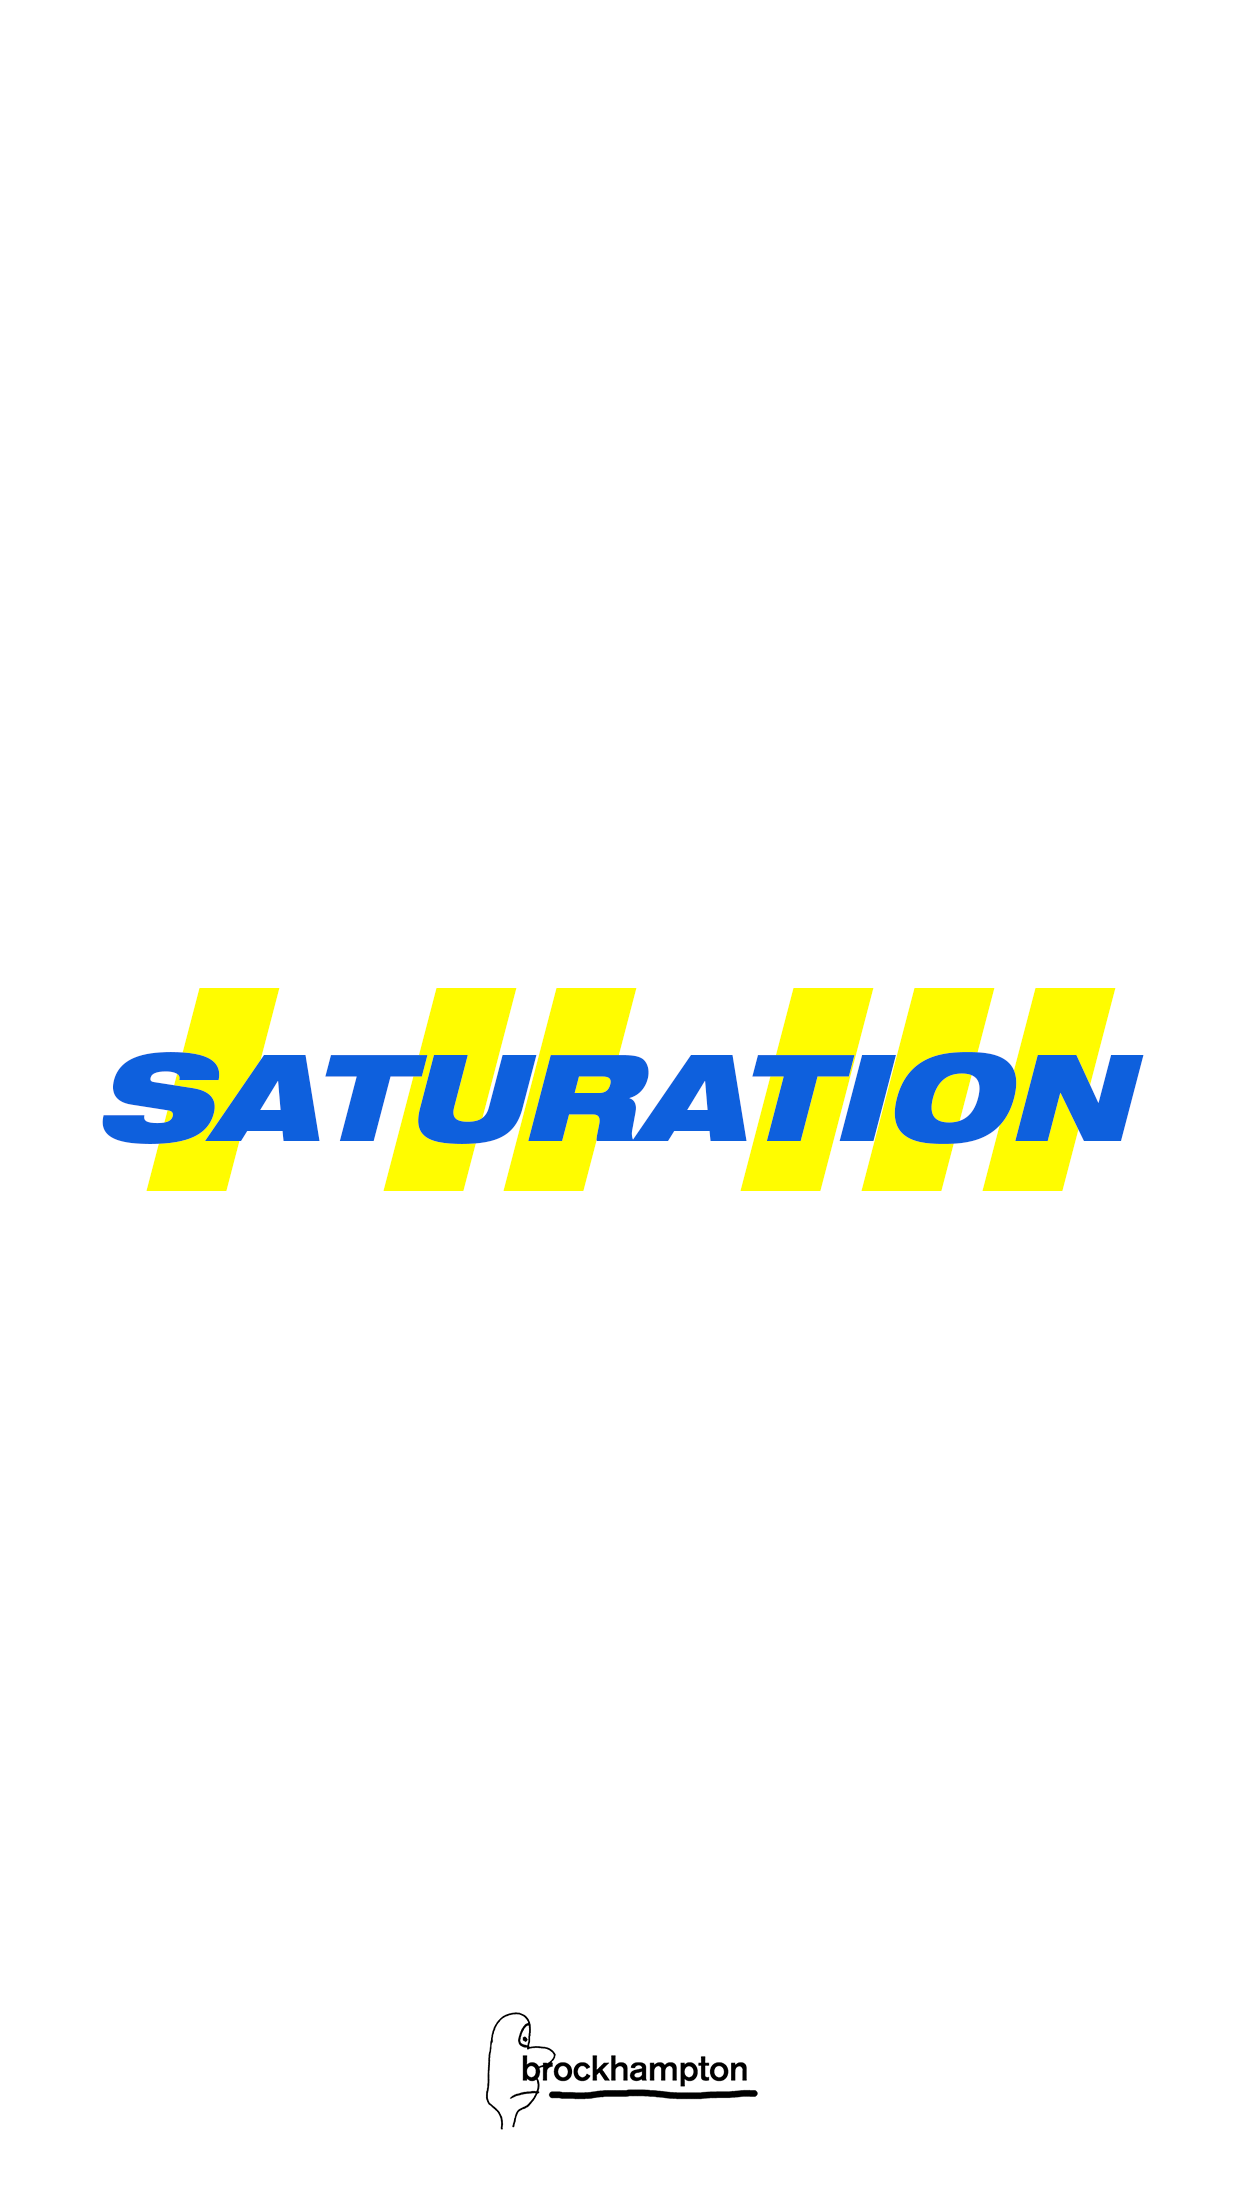 Brockhampton Logo - Saturation Trilogy Shirt Inspired Phone Wallpaper